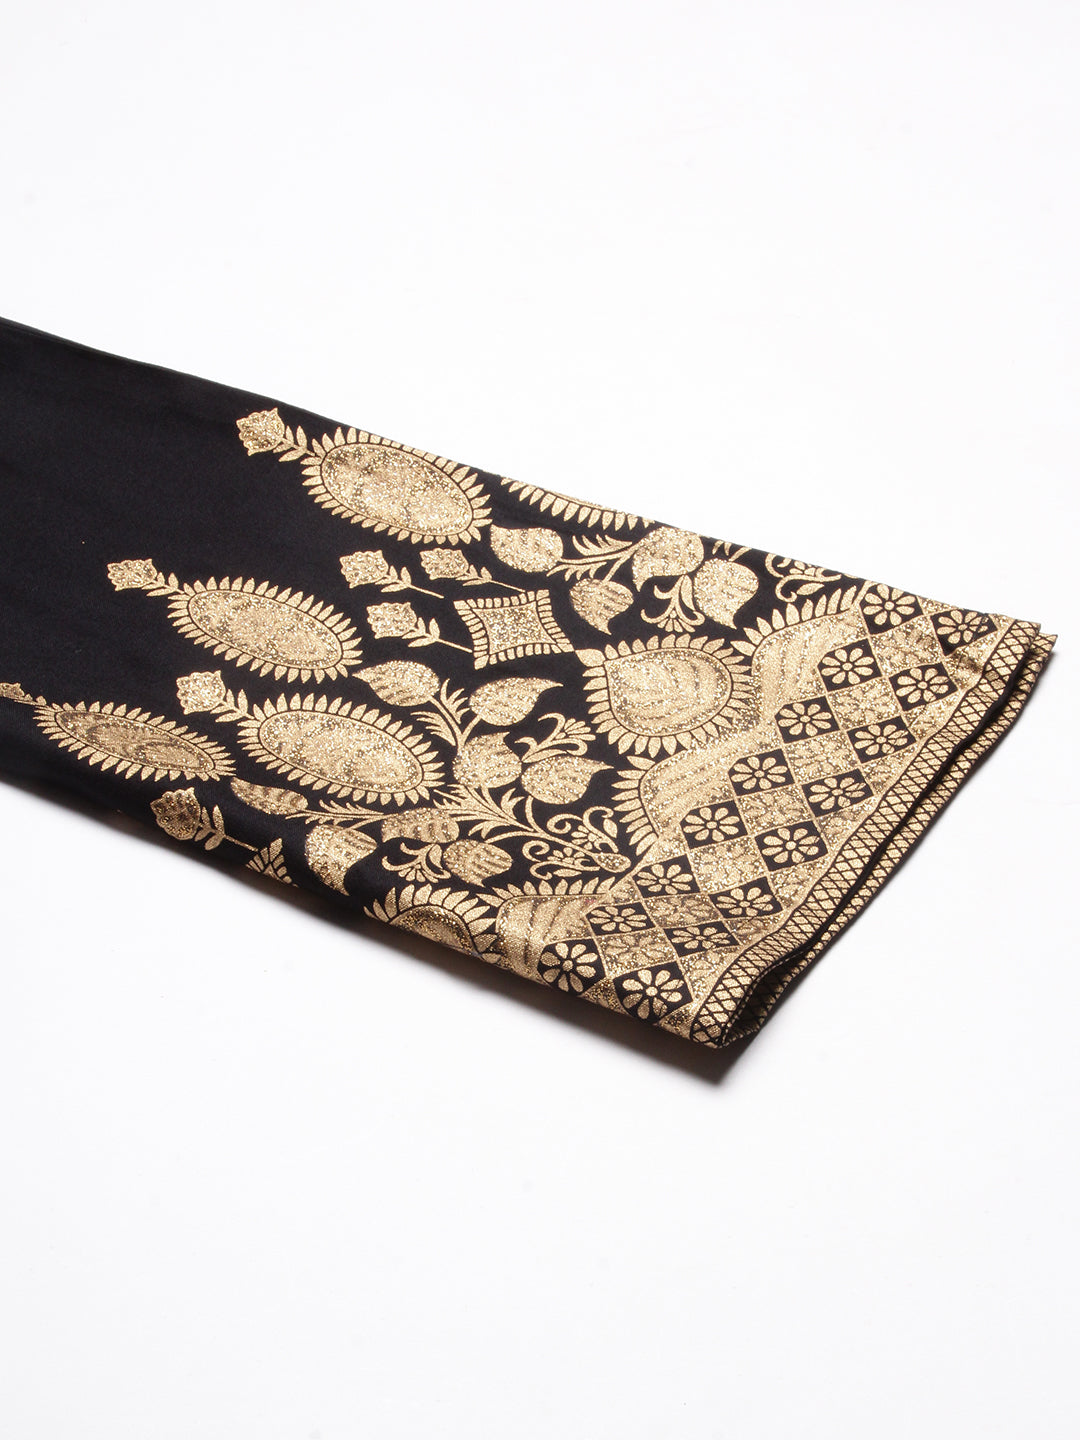 Floral & Ethnic Khari Shimmer Printed Kurta With Palazzo - Black